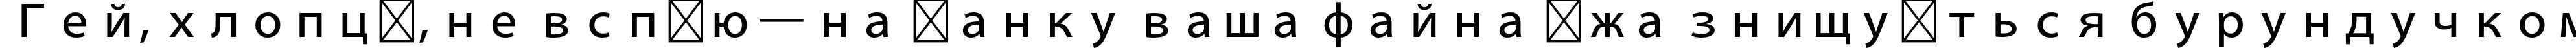 Пример написания шрифтом Adobe Heiti Std R текста на украинском